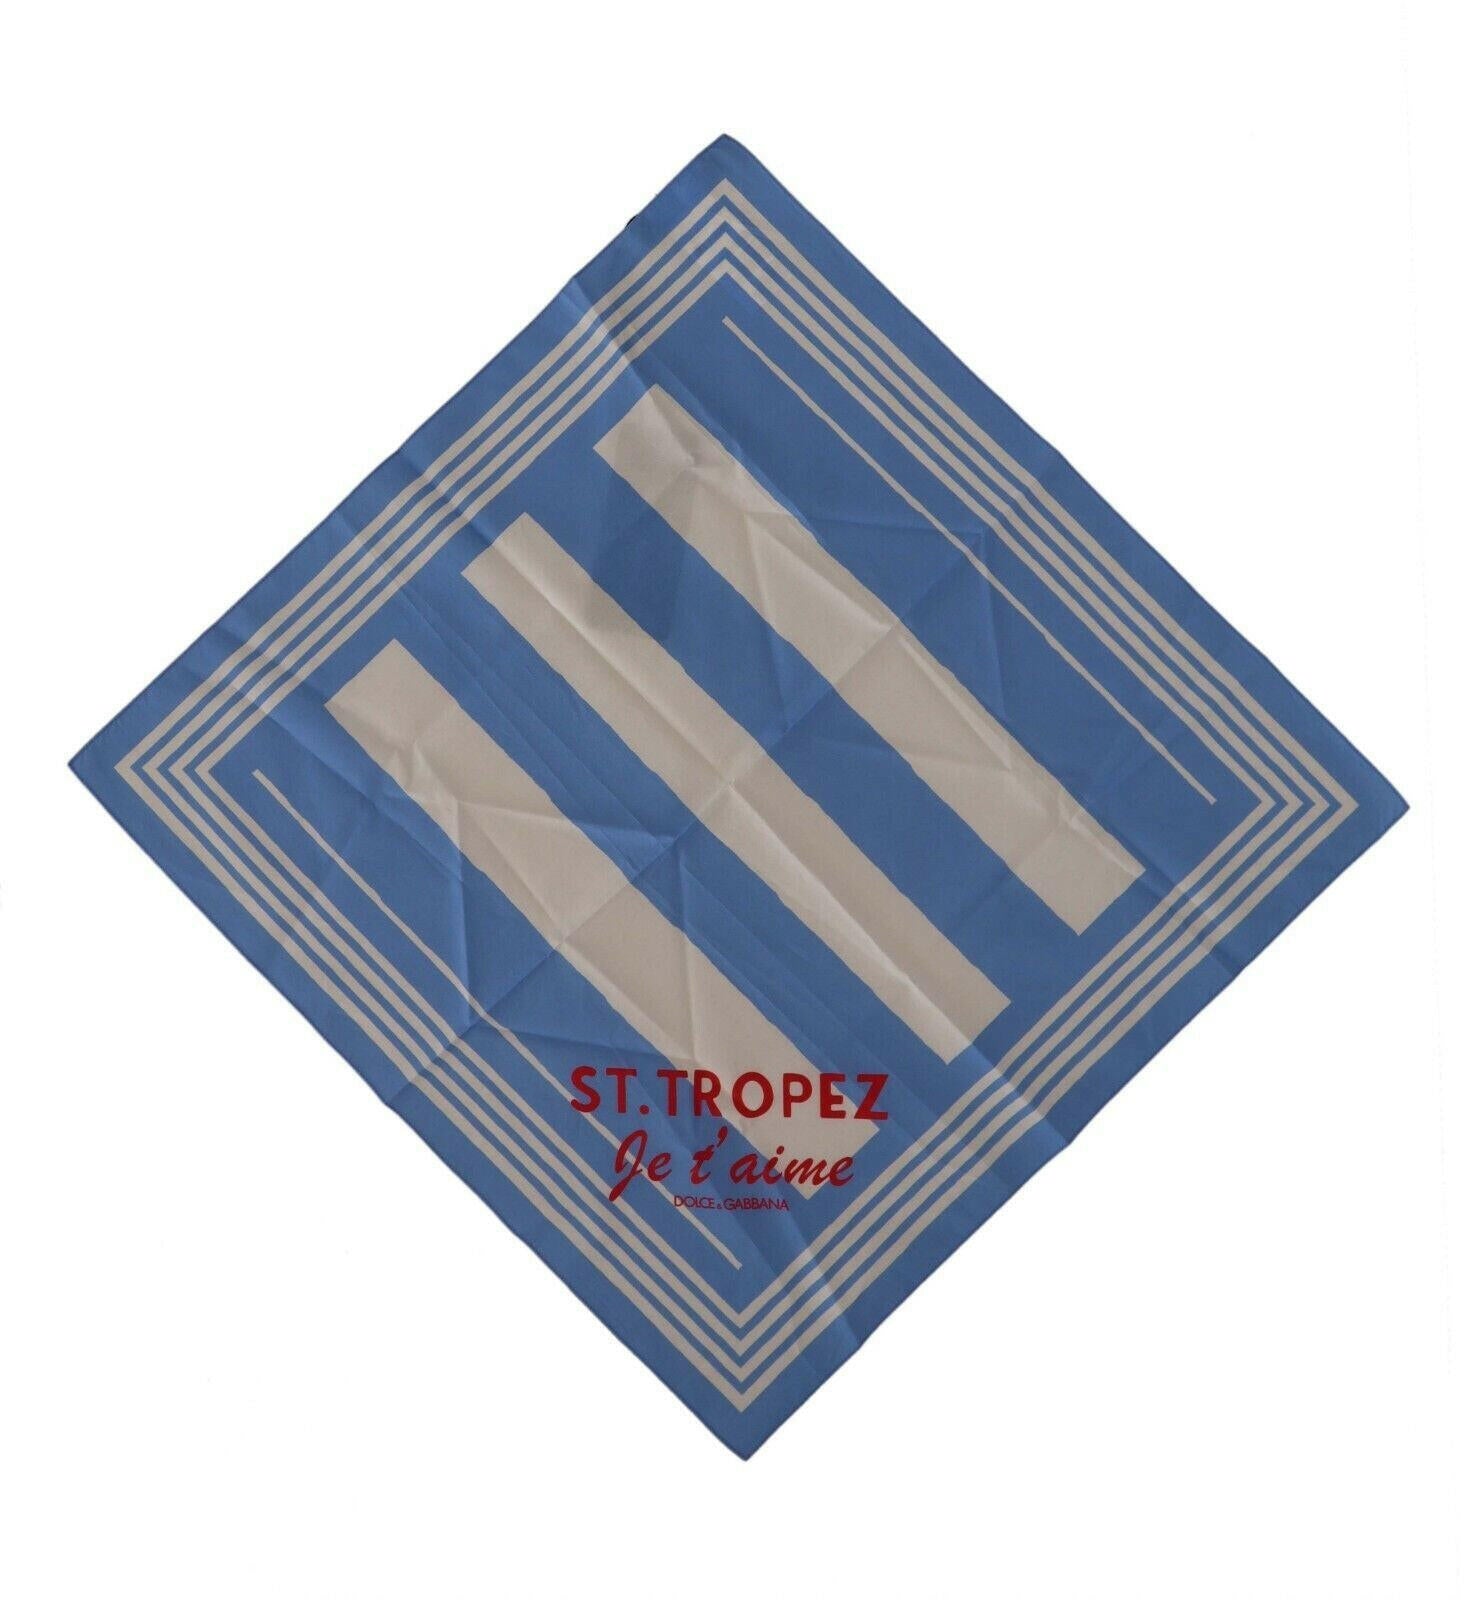 Dolce & Gabbana Blue White Striped St. Tropez Handkerchief  Scarf - GENUINE AUTHENTIC BRAND LLC  